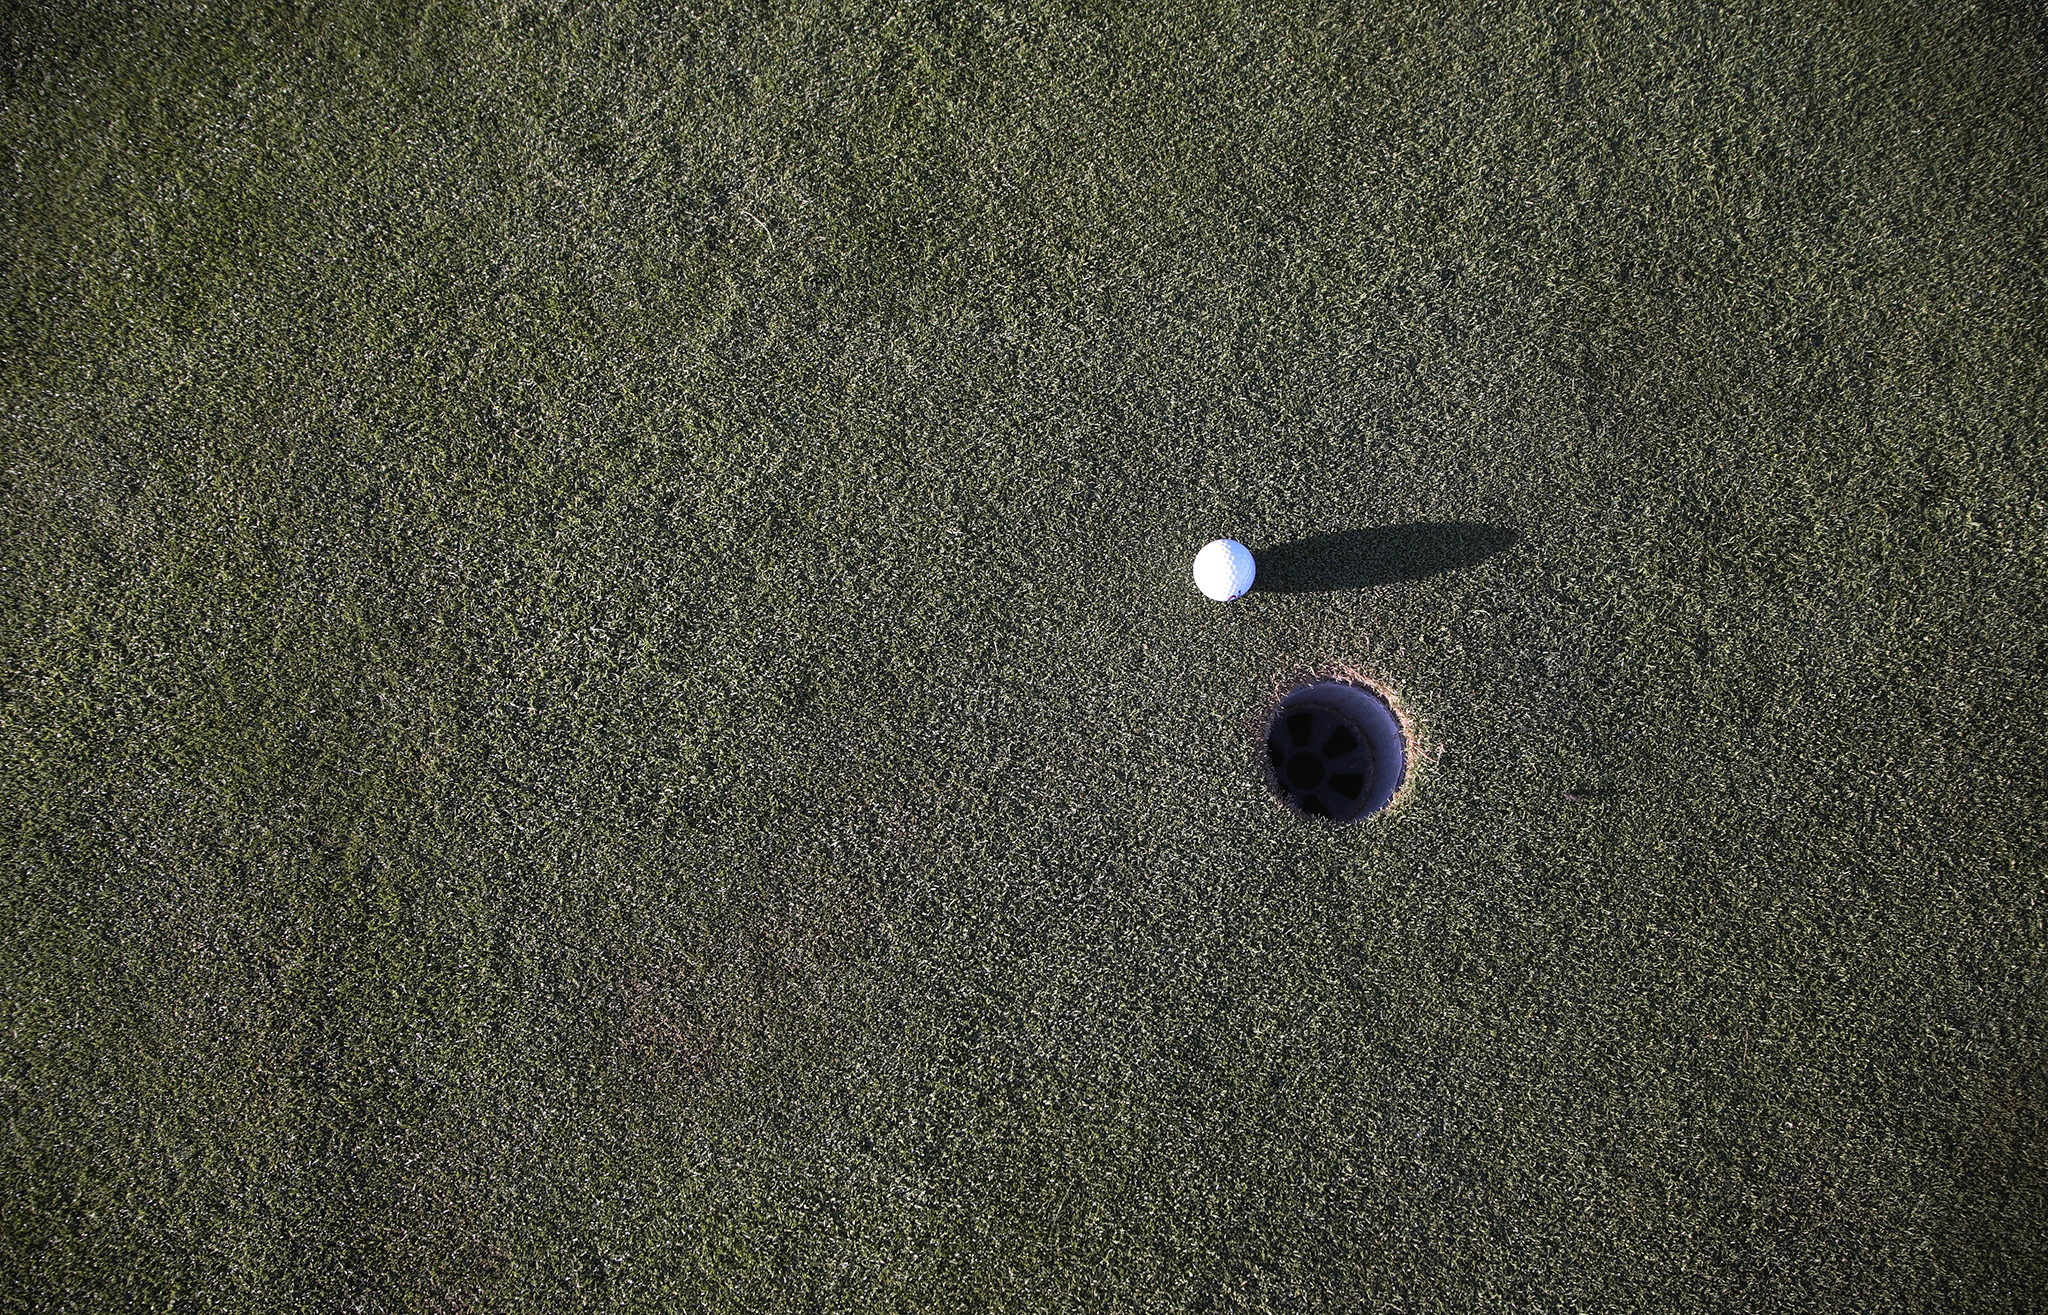 Golf ball near hole 